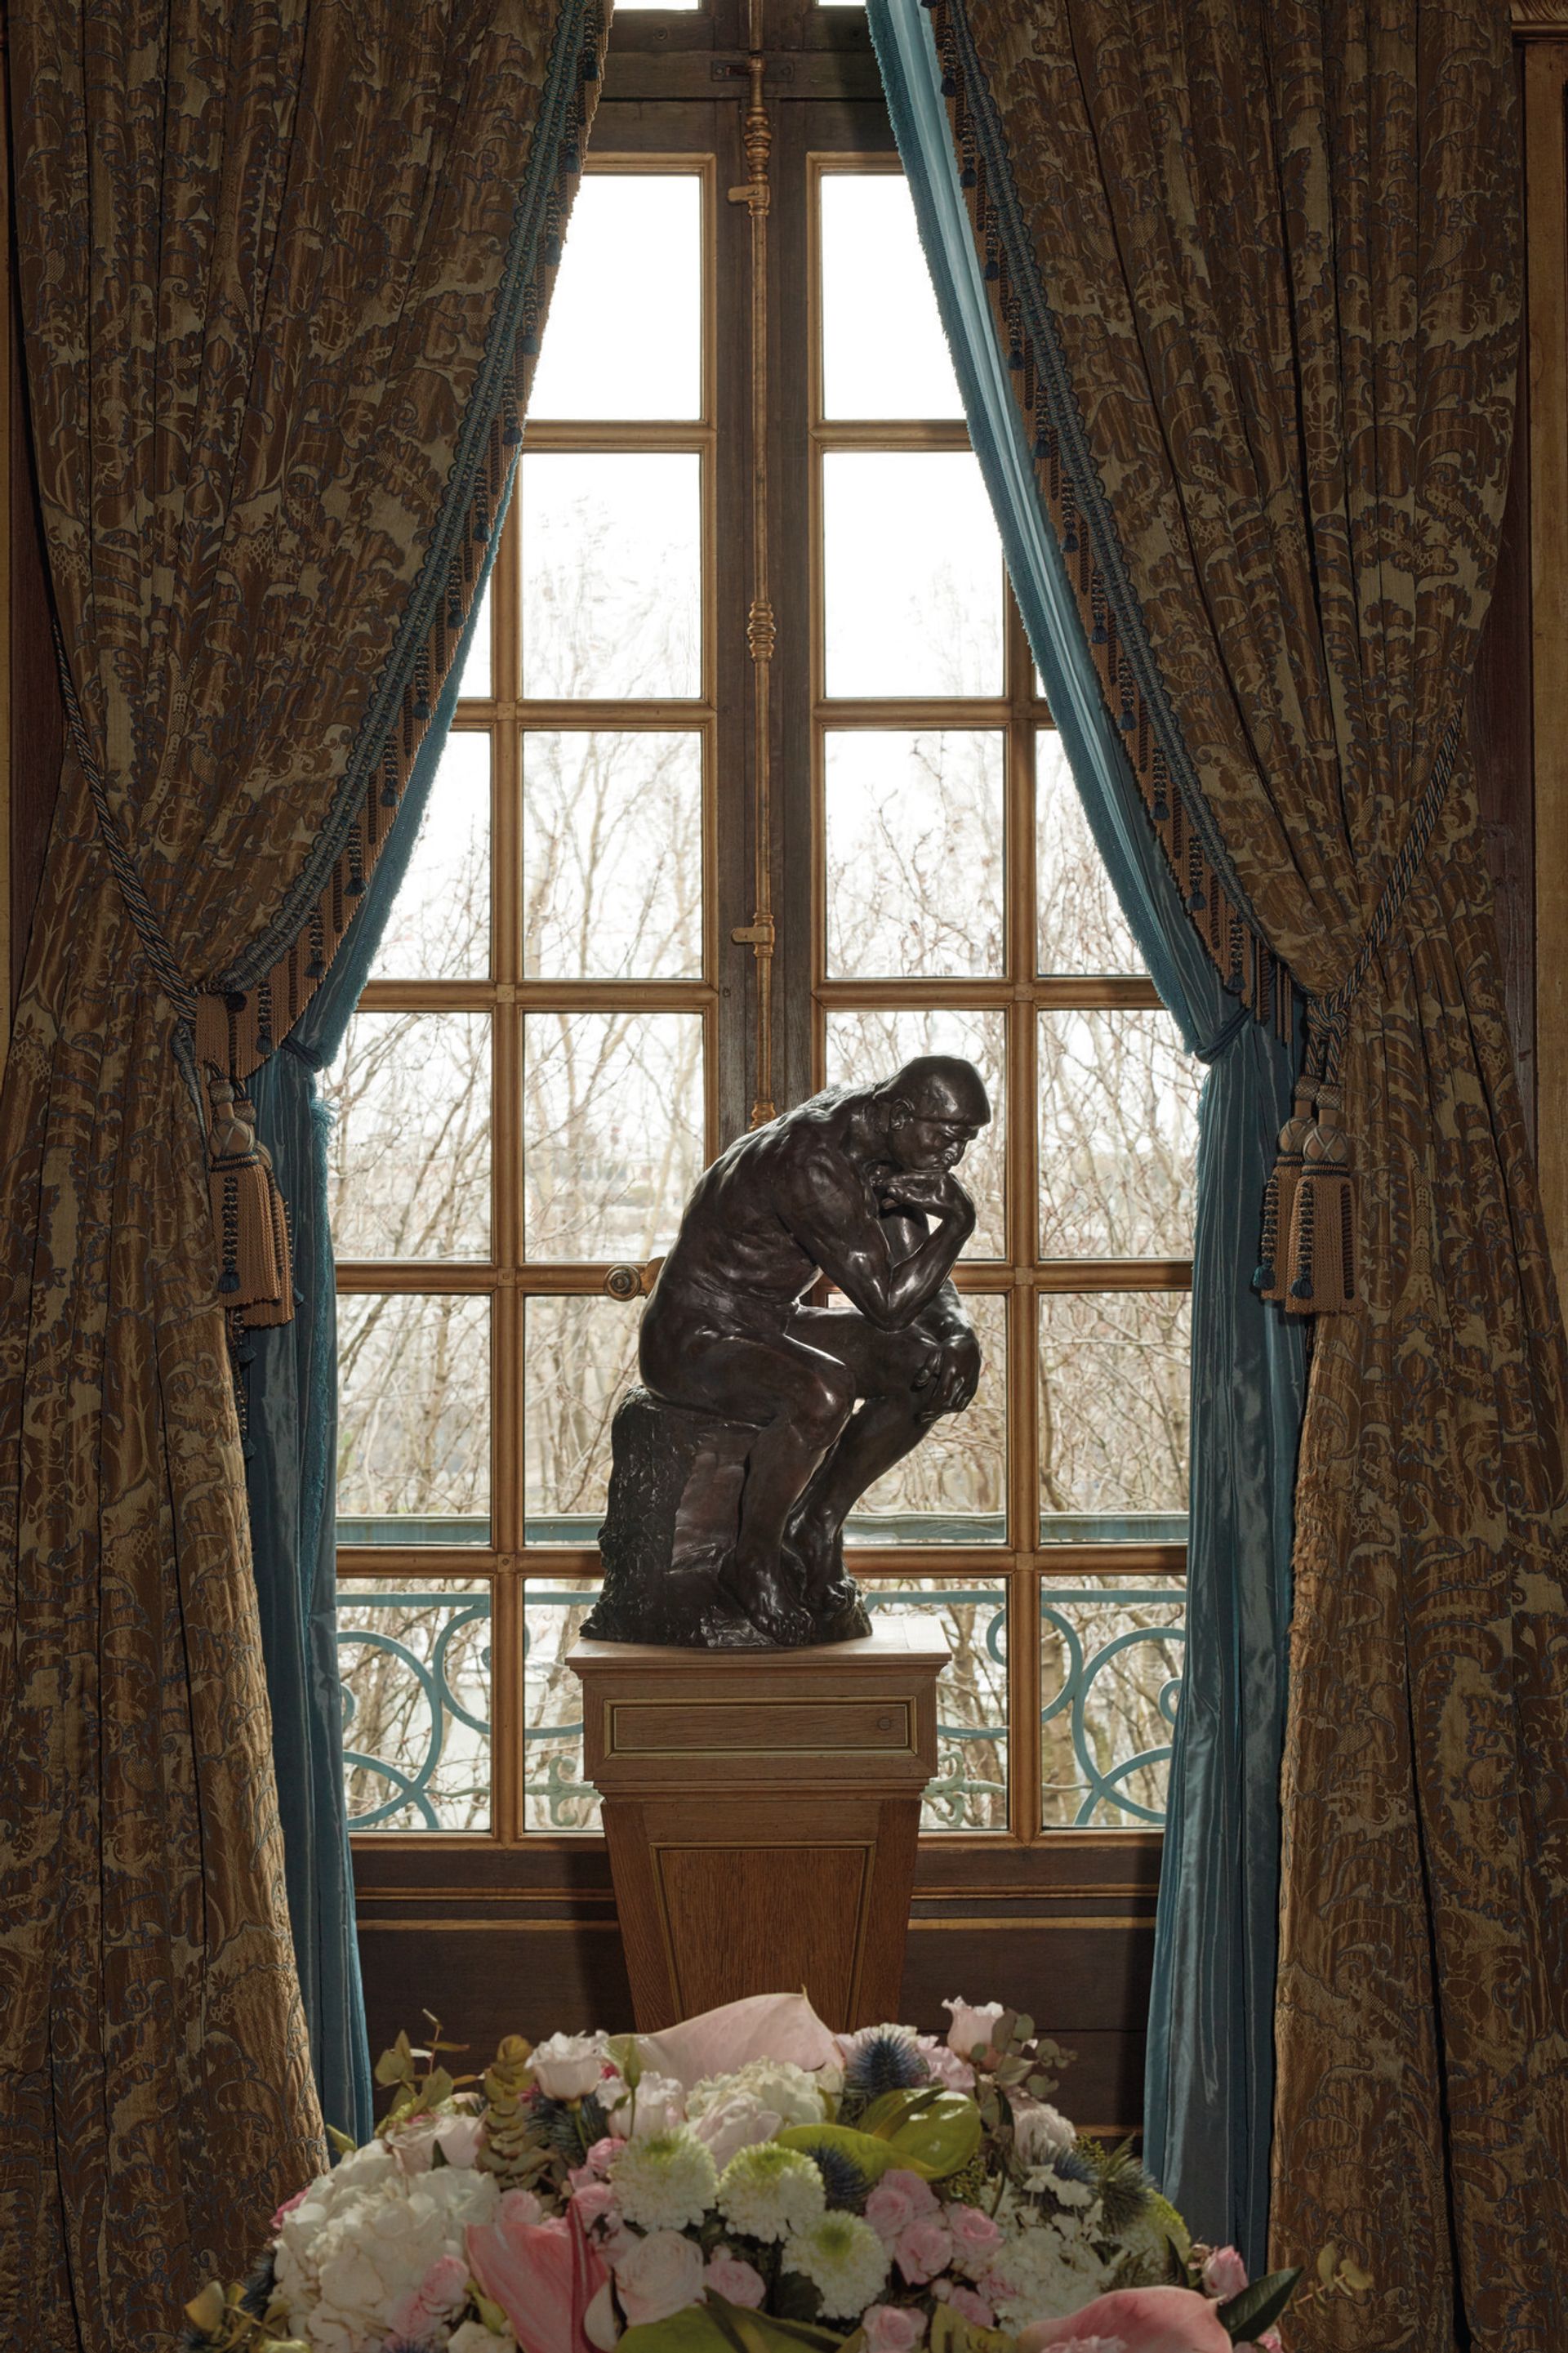 Rodin's The Thinker

Courtesy of Christie's